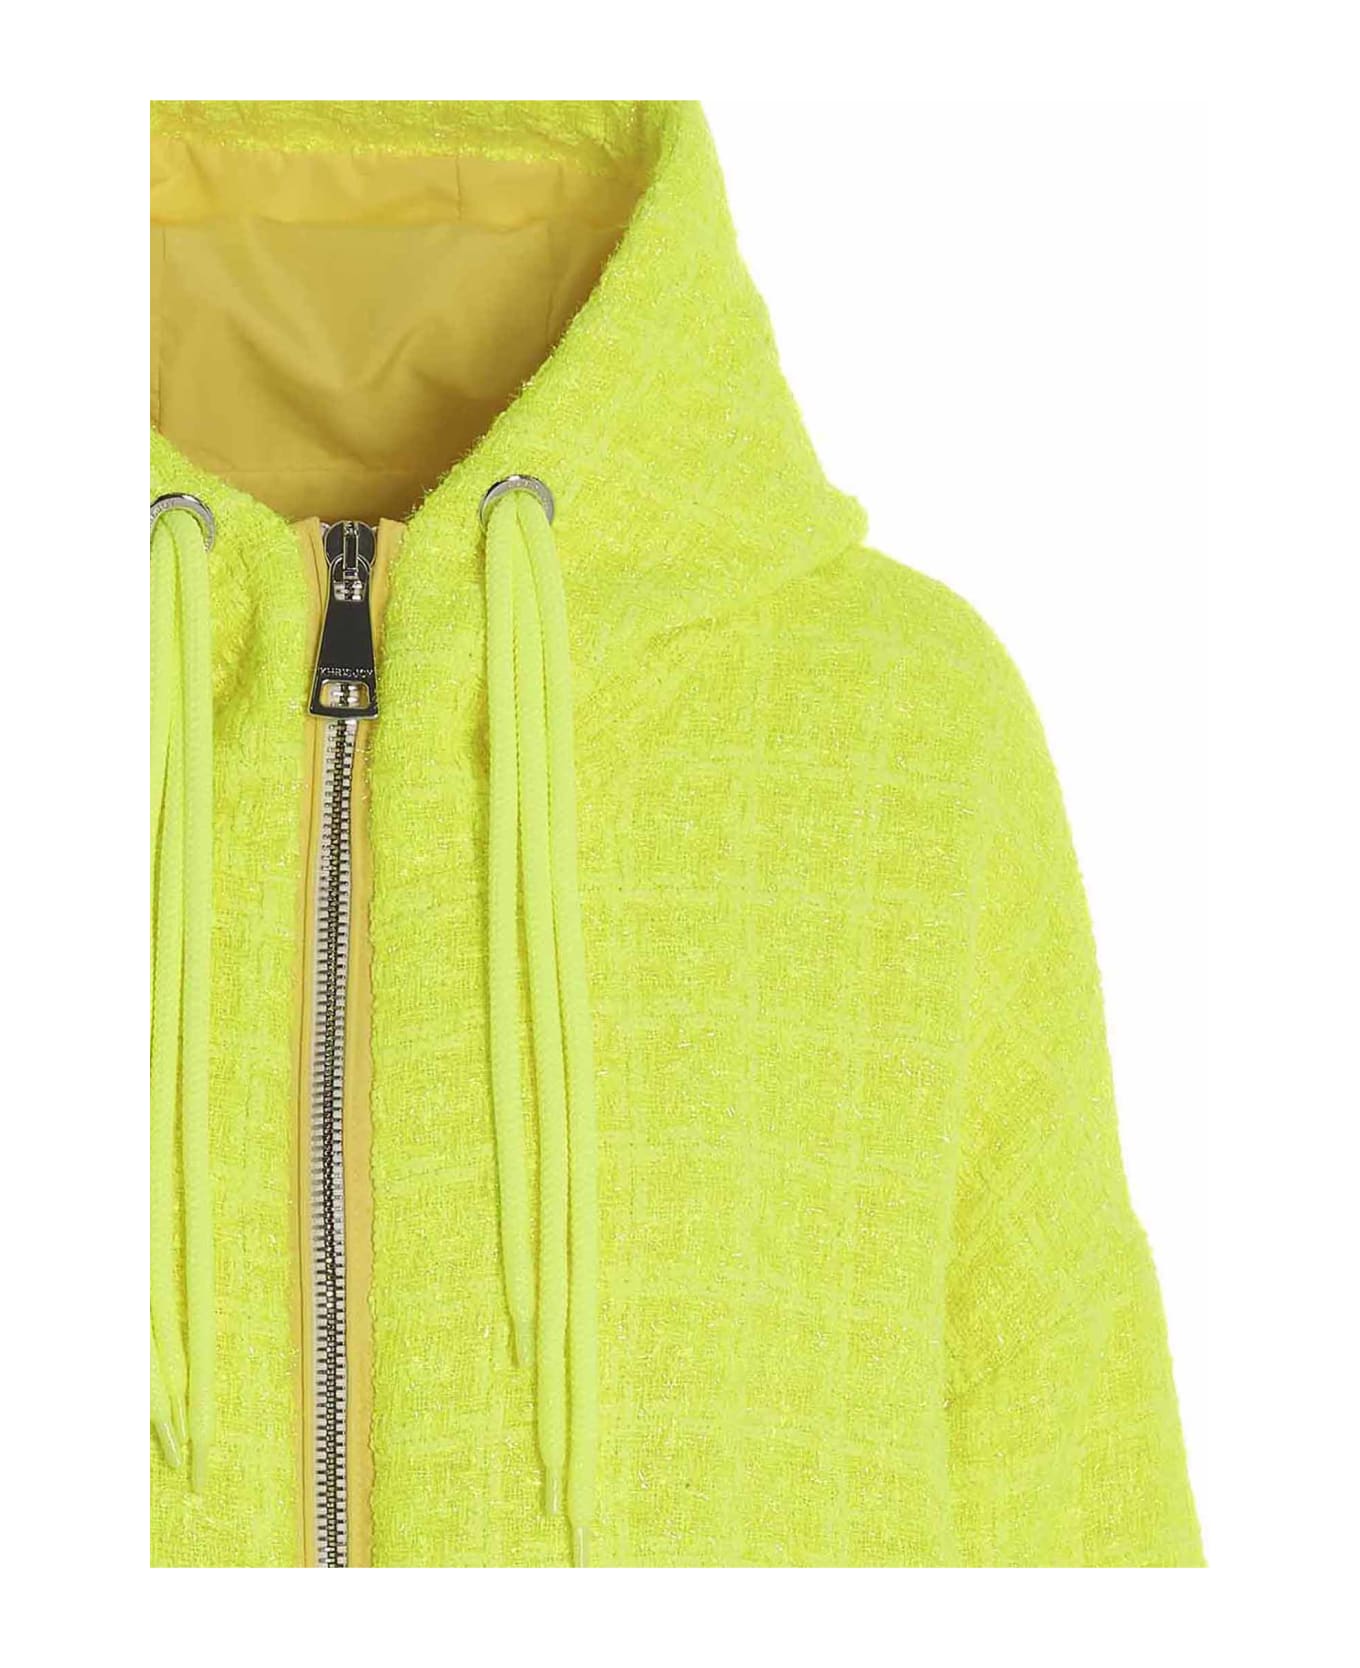 Khrisjoy 'khris Windbreaker Tweed Jacket - Yellow